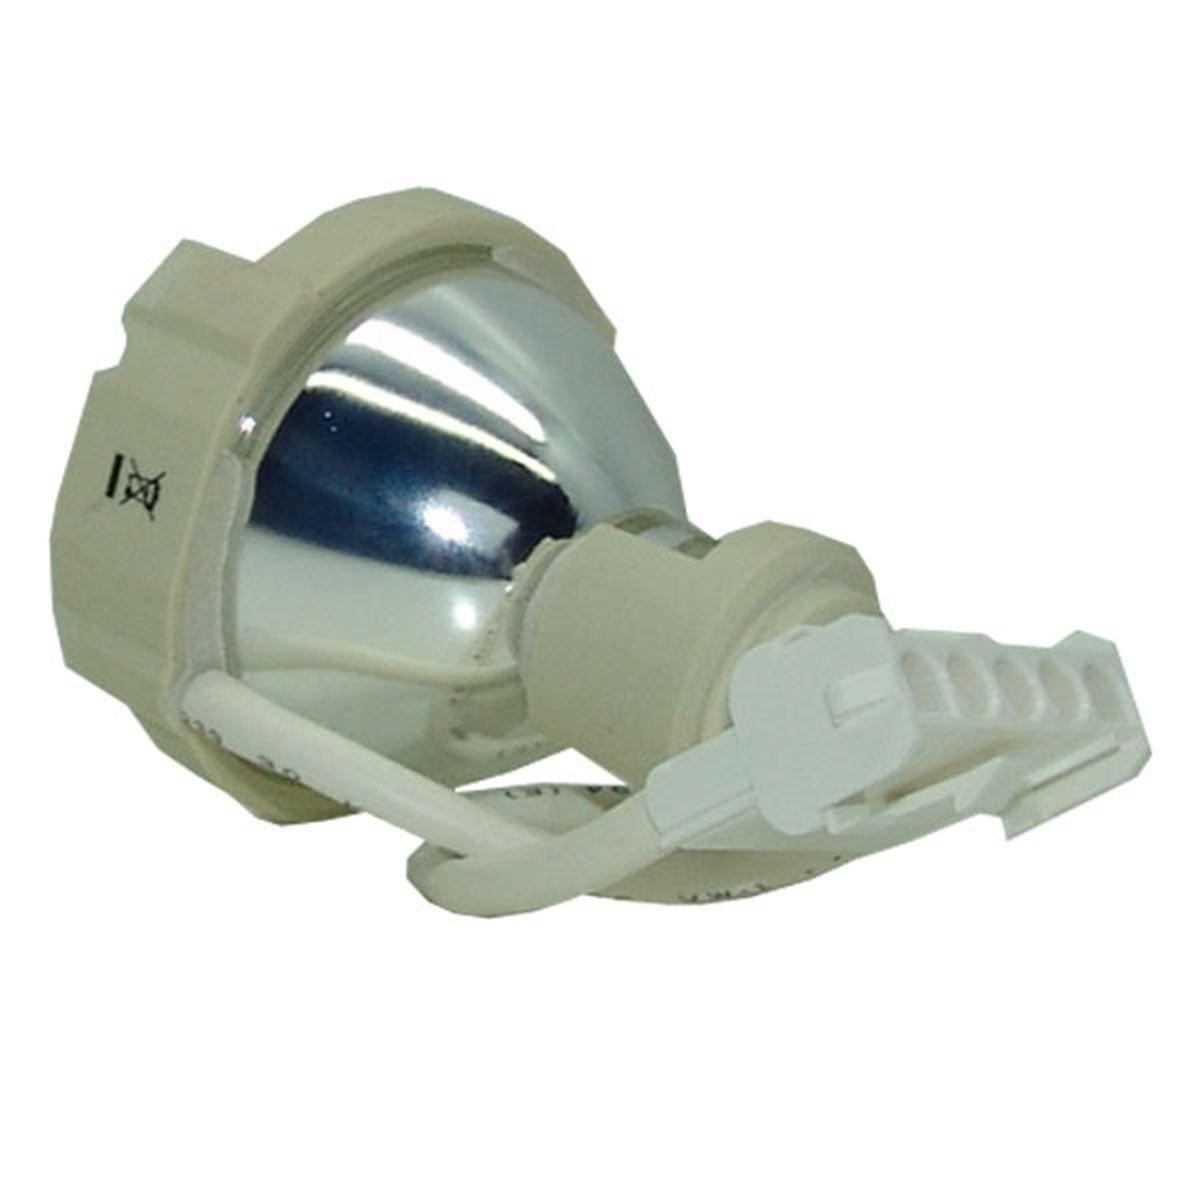 GEHA 60-136931 Osram Projector Bare Lamp